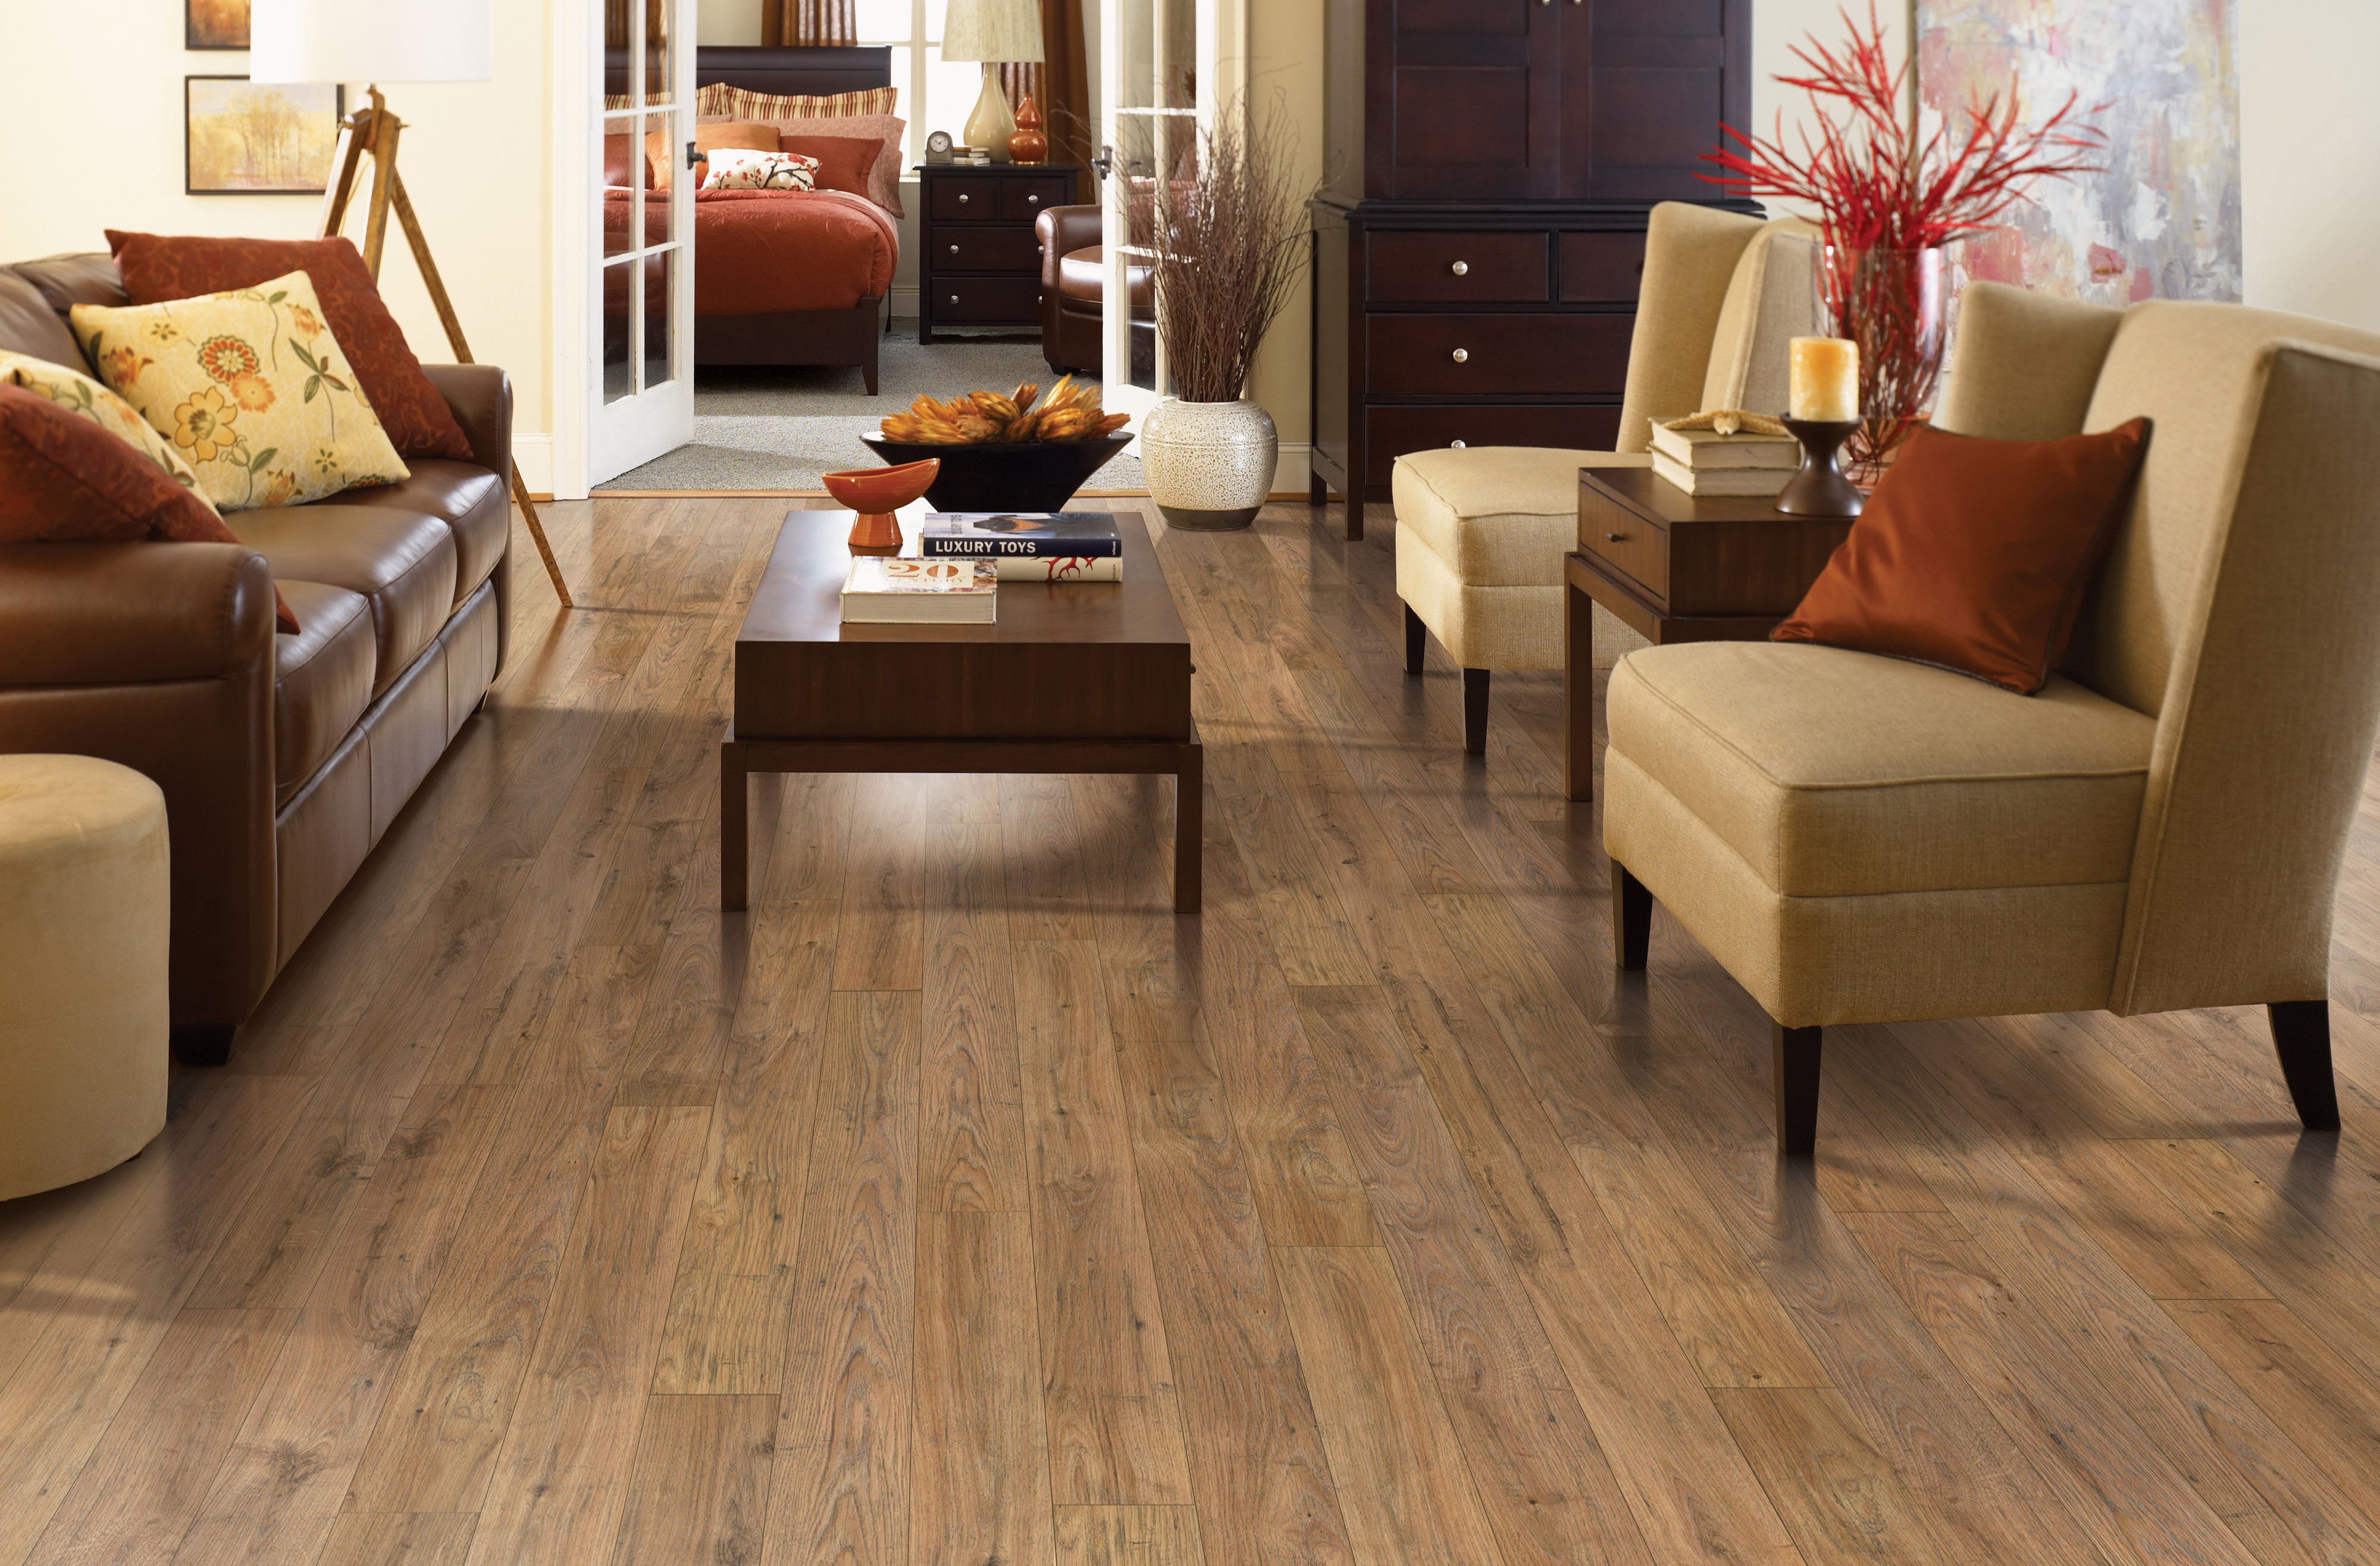 Laminate Floors - Get the Best Laminate Flooring Options in Tampa